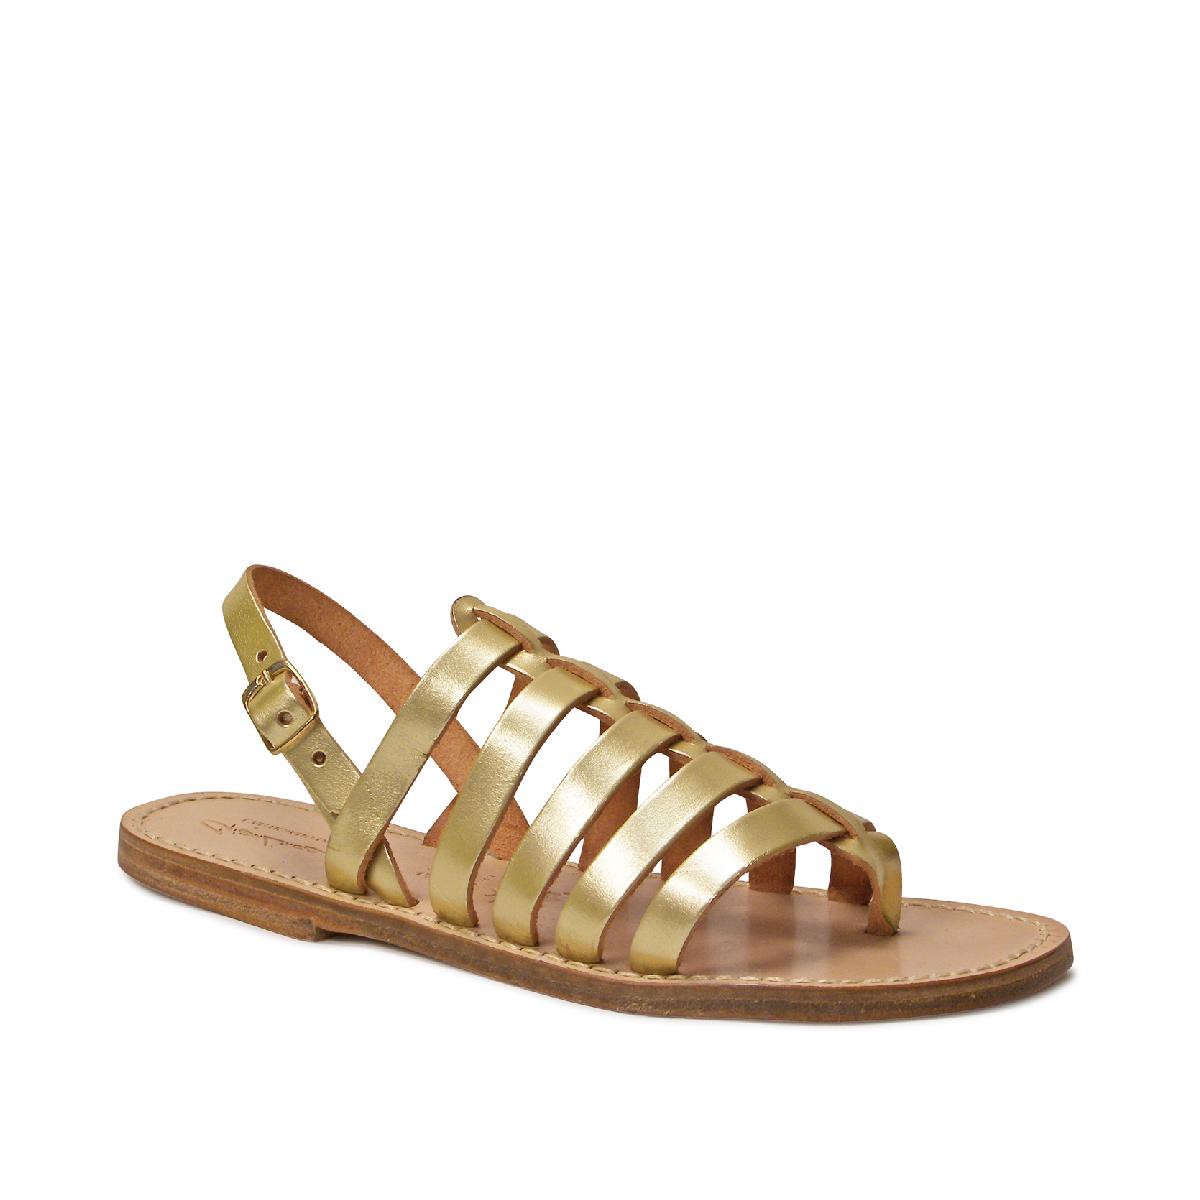 Buy Dapper Feet Designer Flat Sandals Gold Online